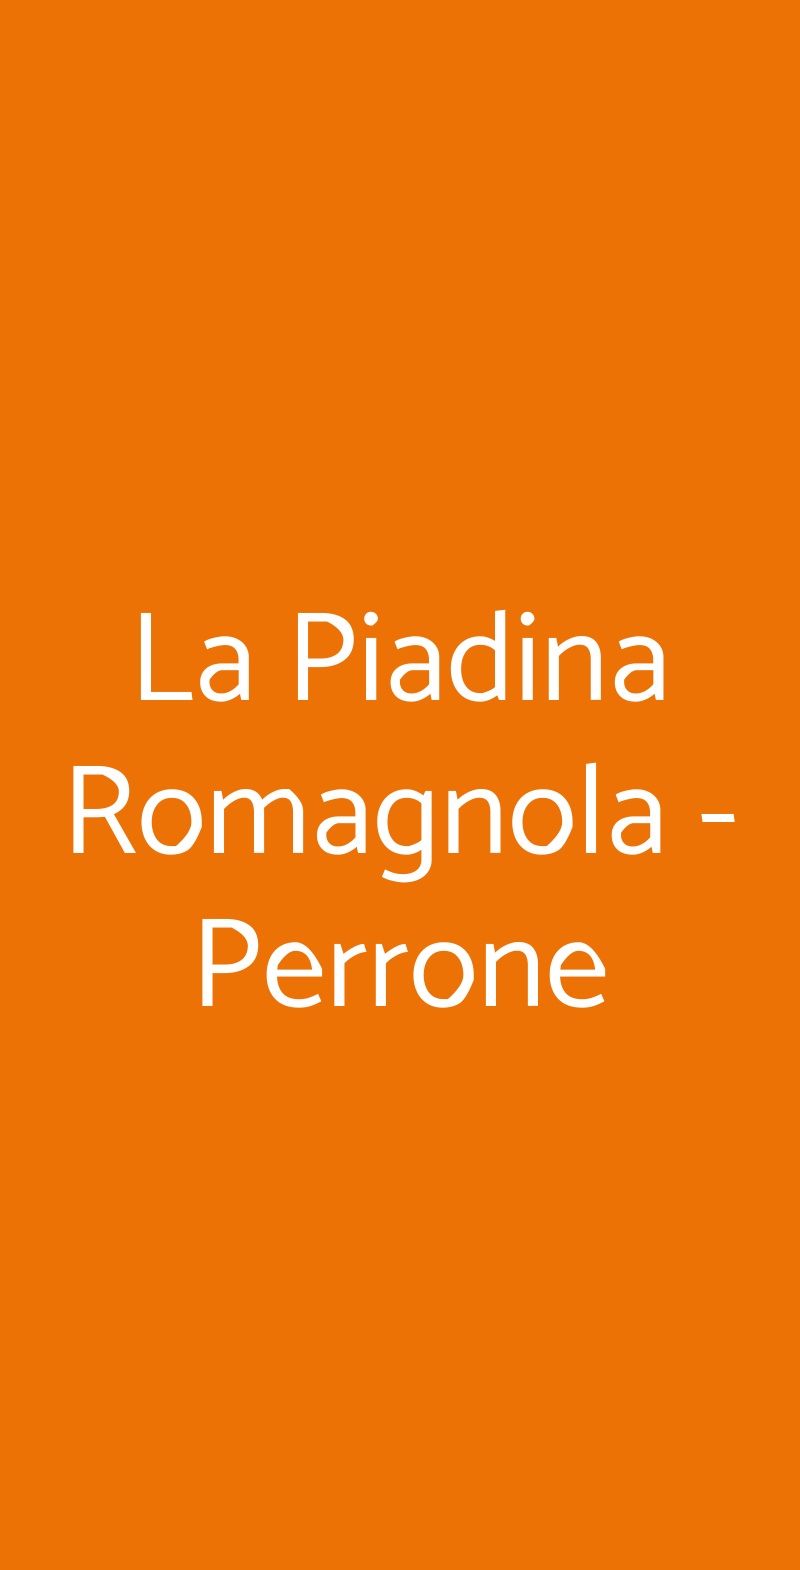 La Piadina Romagnola - Perrone Torino menù 1 pagina